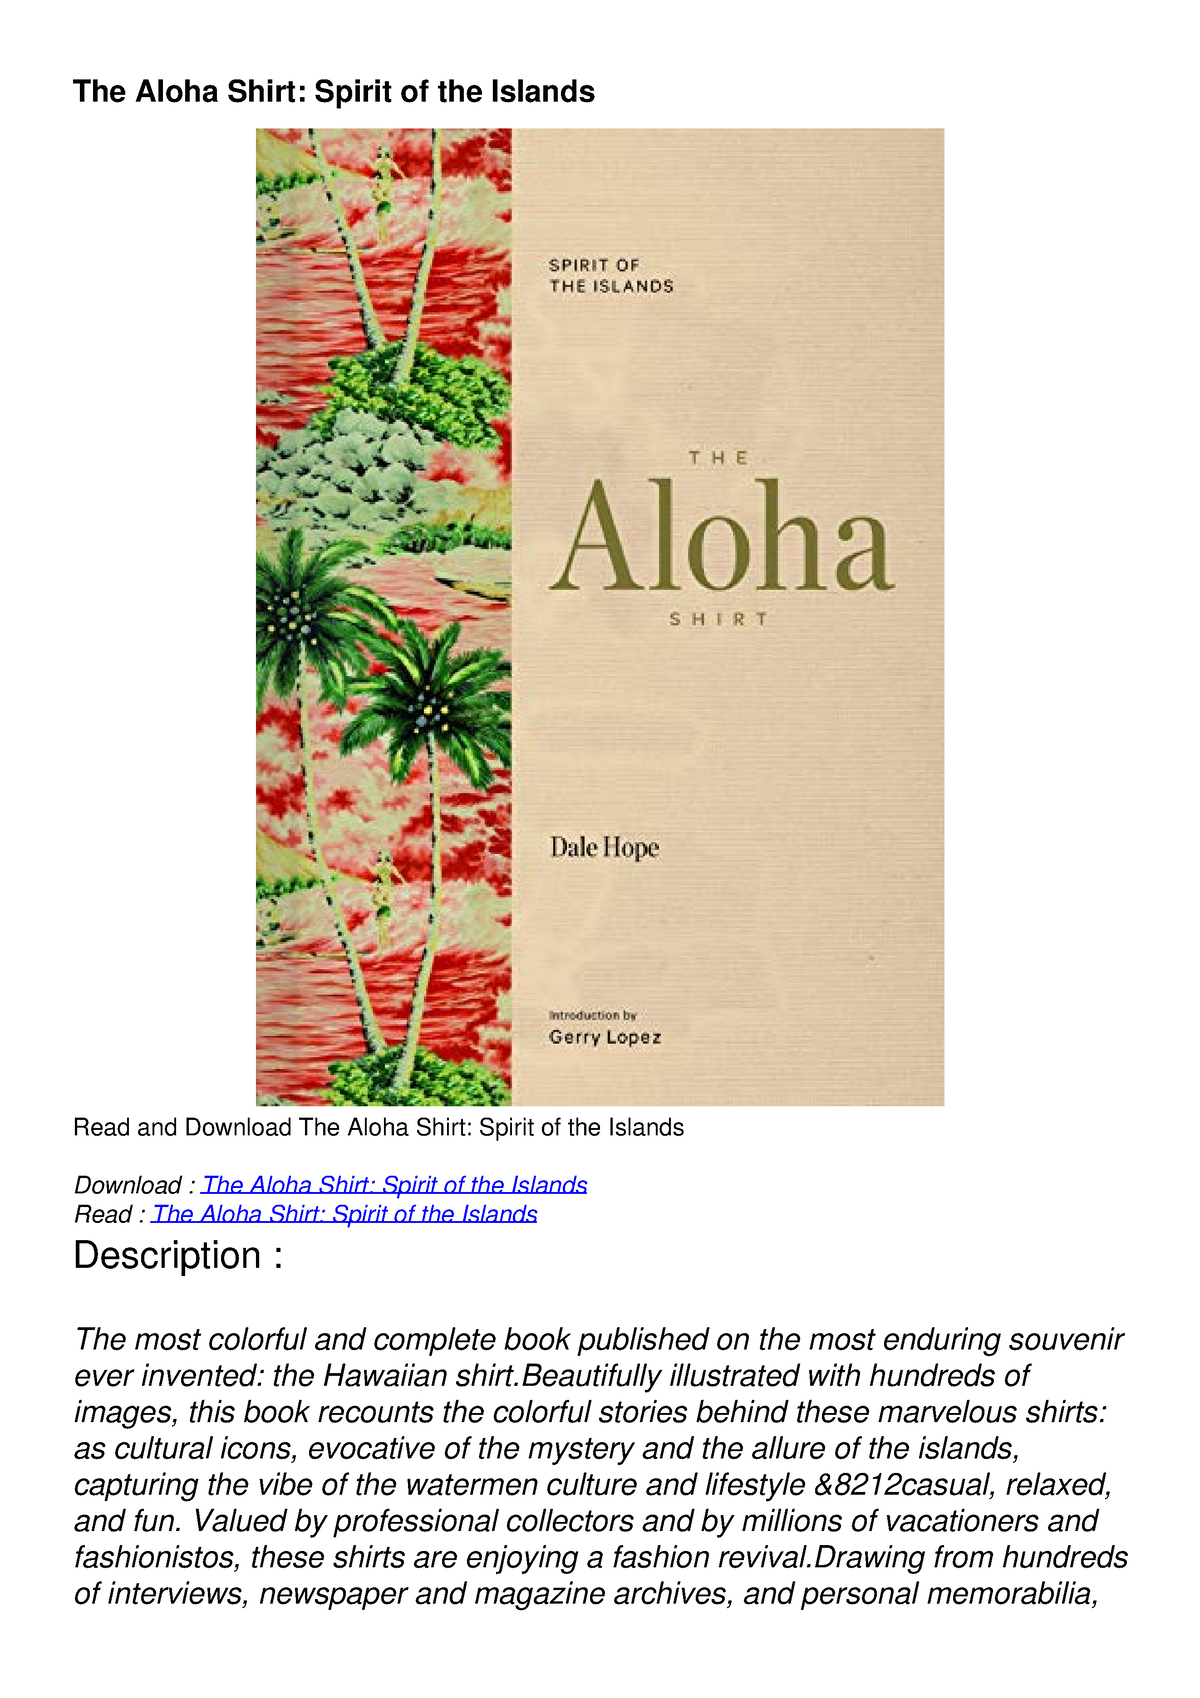 READ DOWNLOAD] The Aloha Shirt: Spirit of the Islands - The Aloha